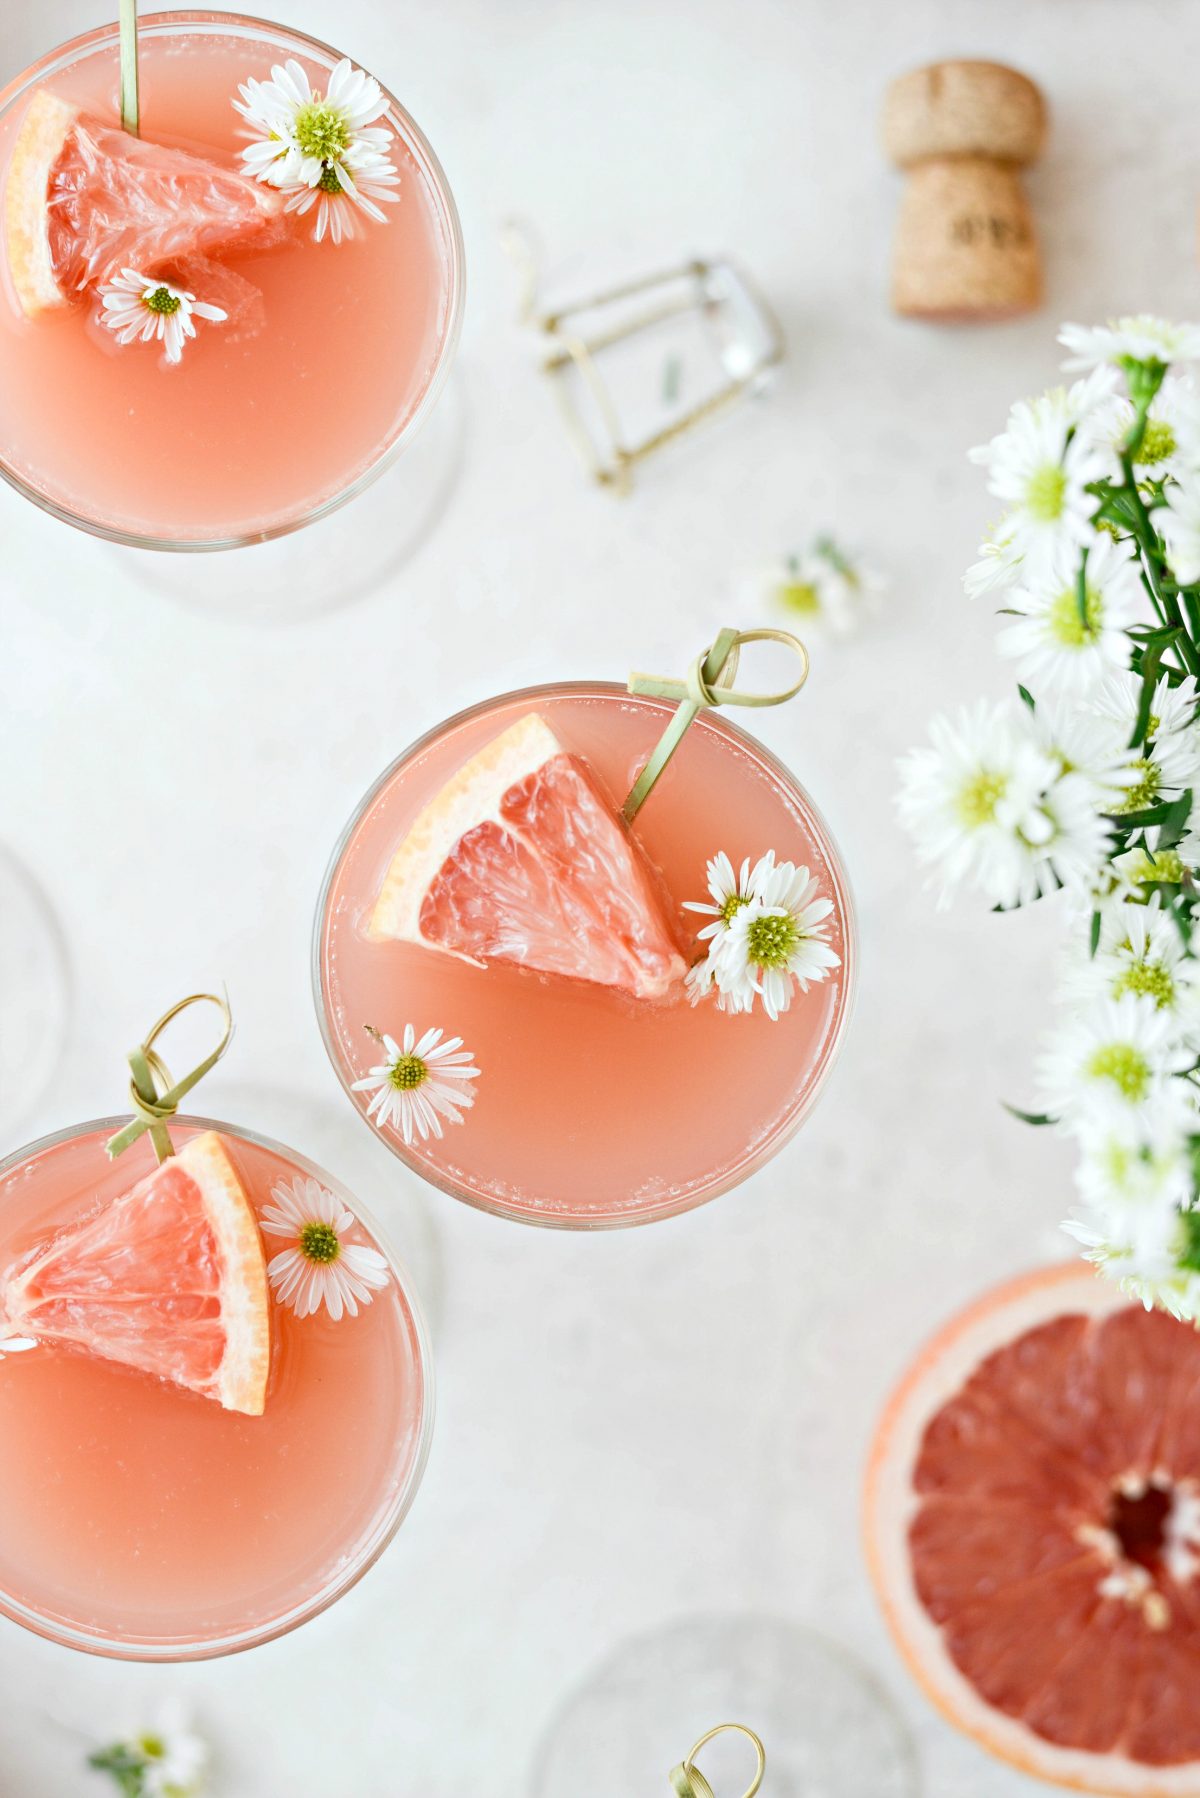 Grapefrukt Rosé Mimosas l SimplyScratch.com # voksen # drikke # grapefrukt # rose # mimosa # påske # brunsj # mothersday